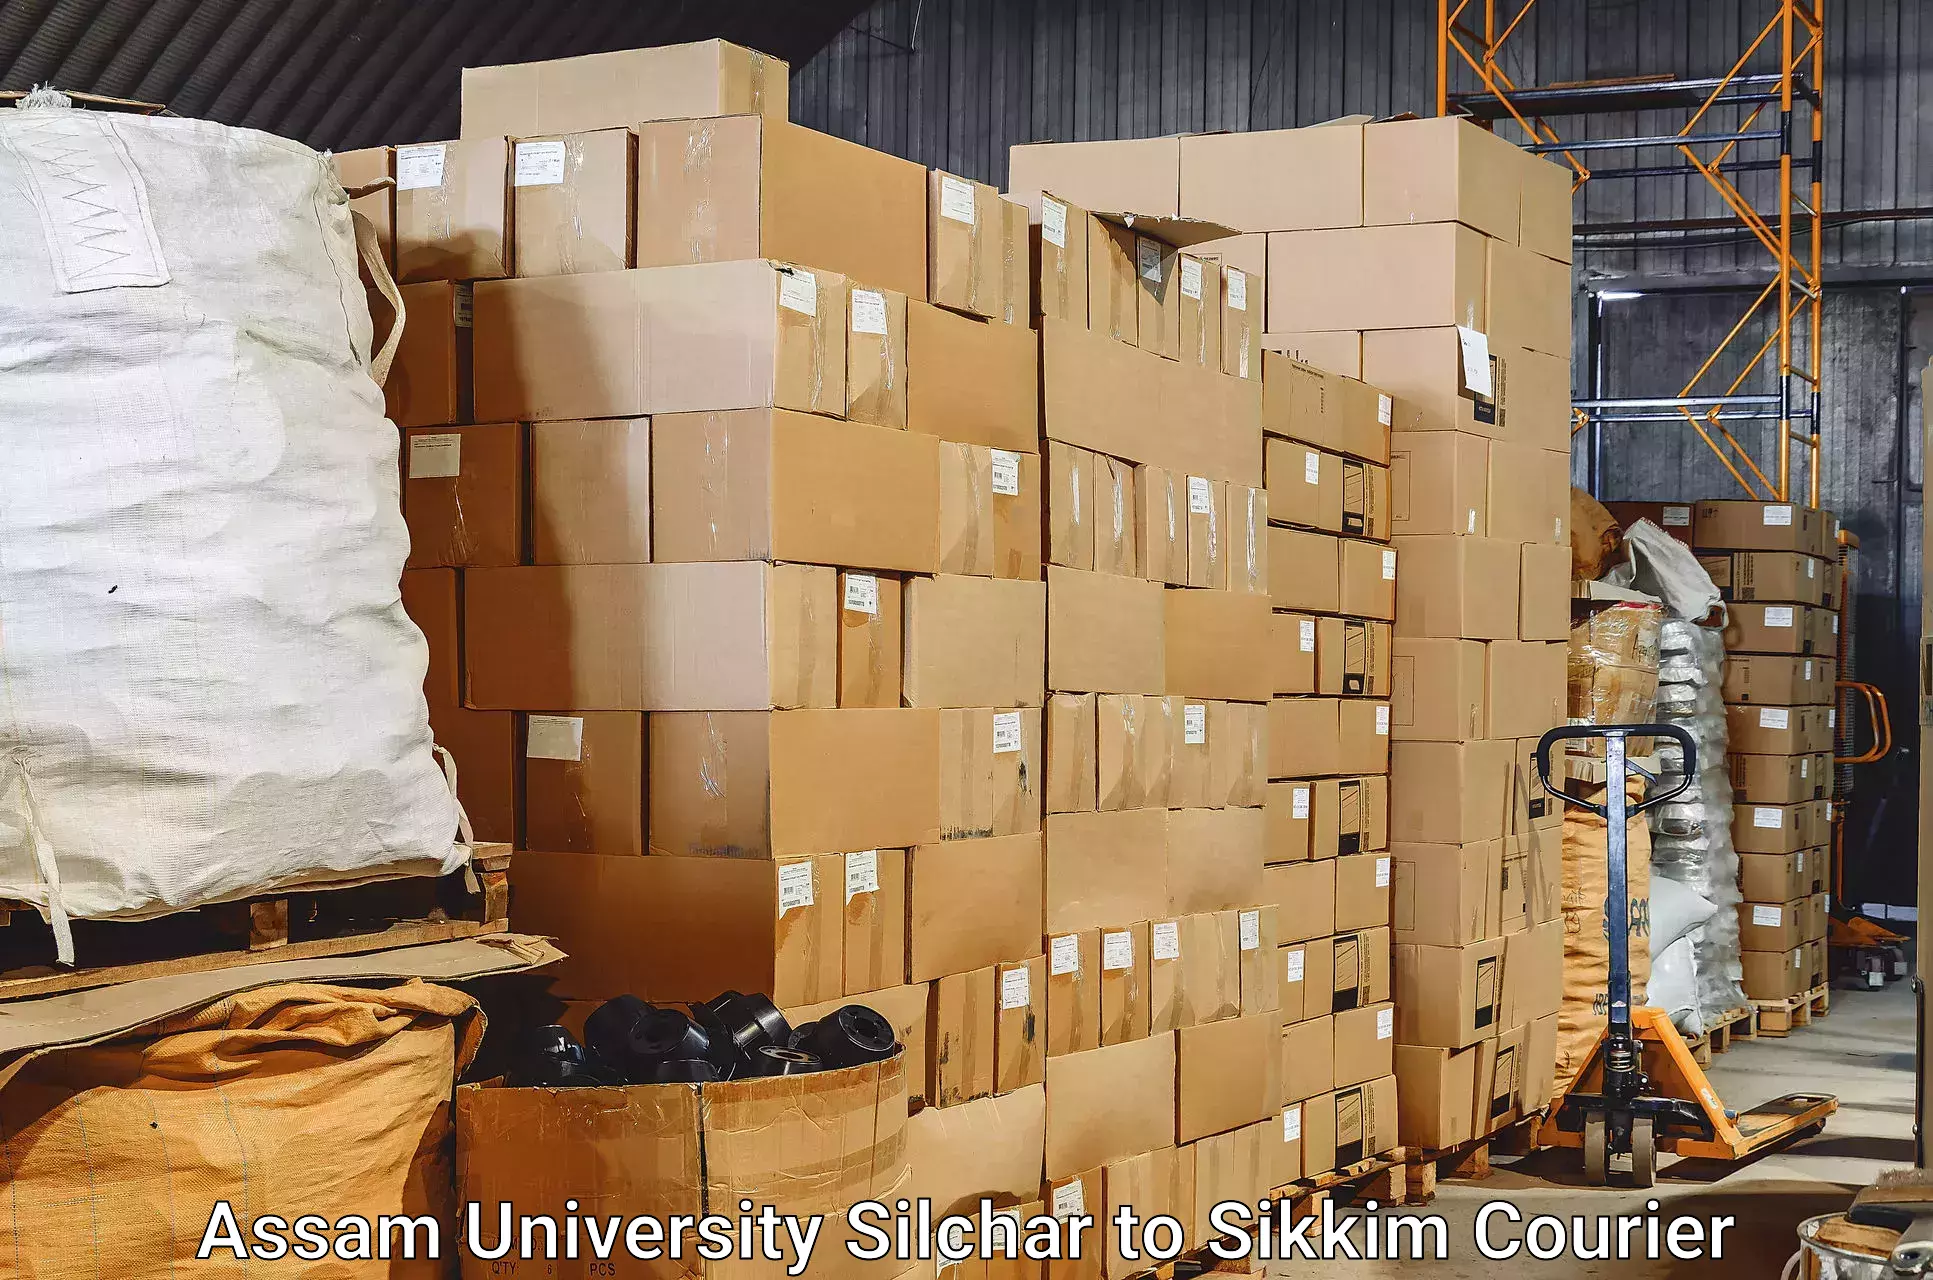 Door to door luggage delivery in Assam University Silchar to South Sikkim